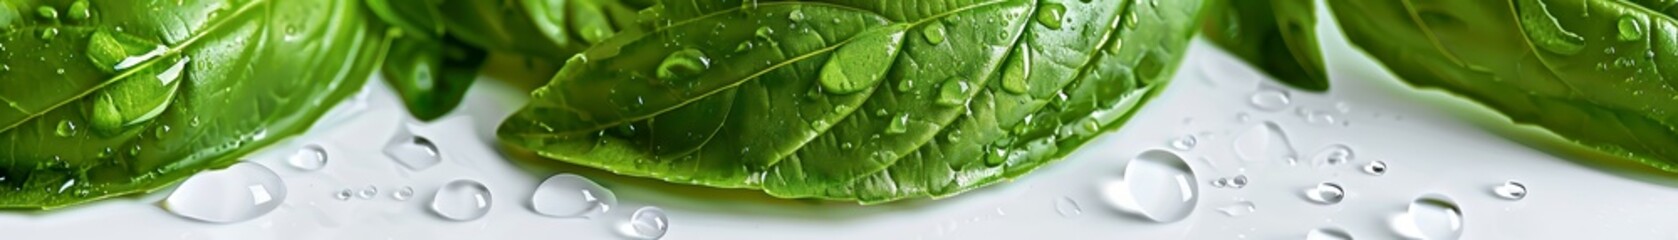 Fresh basil leaves vibrant green water droplets macro on white